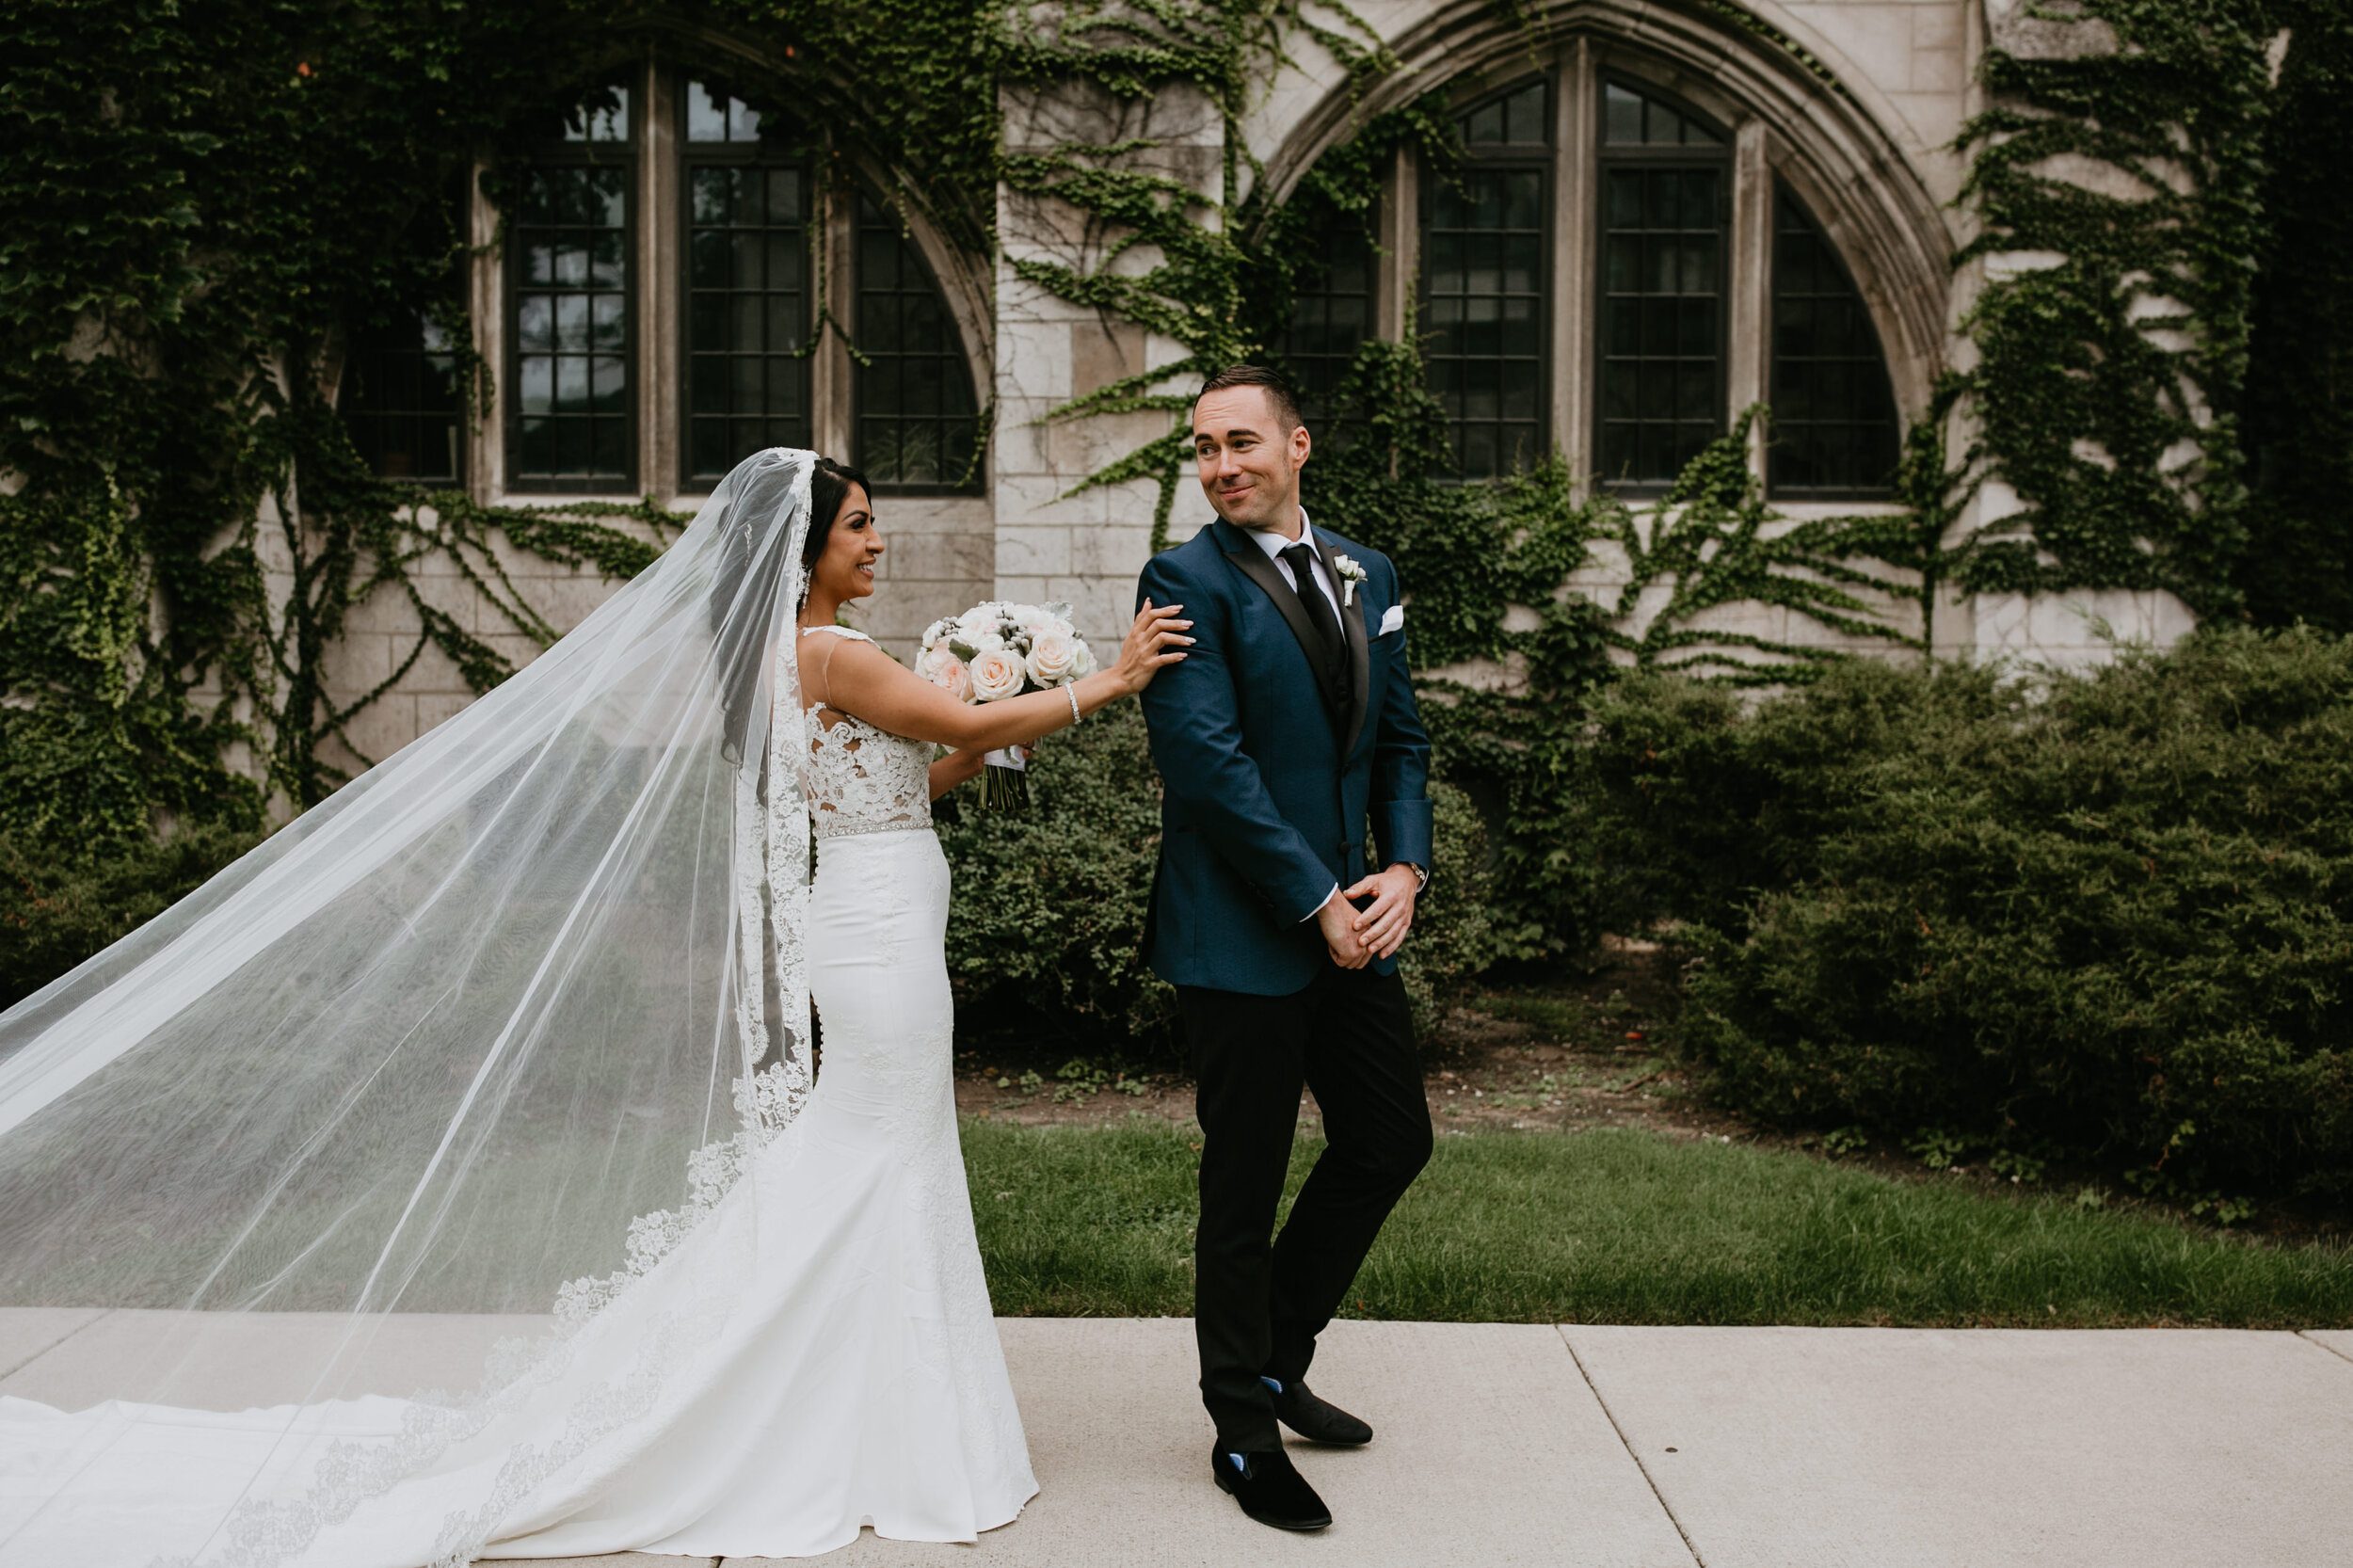 Chicago Wedding Photographer, Chicago suburbs wedding, Chicago wedding, Illinois wedding photographer, Chicago area photographer